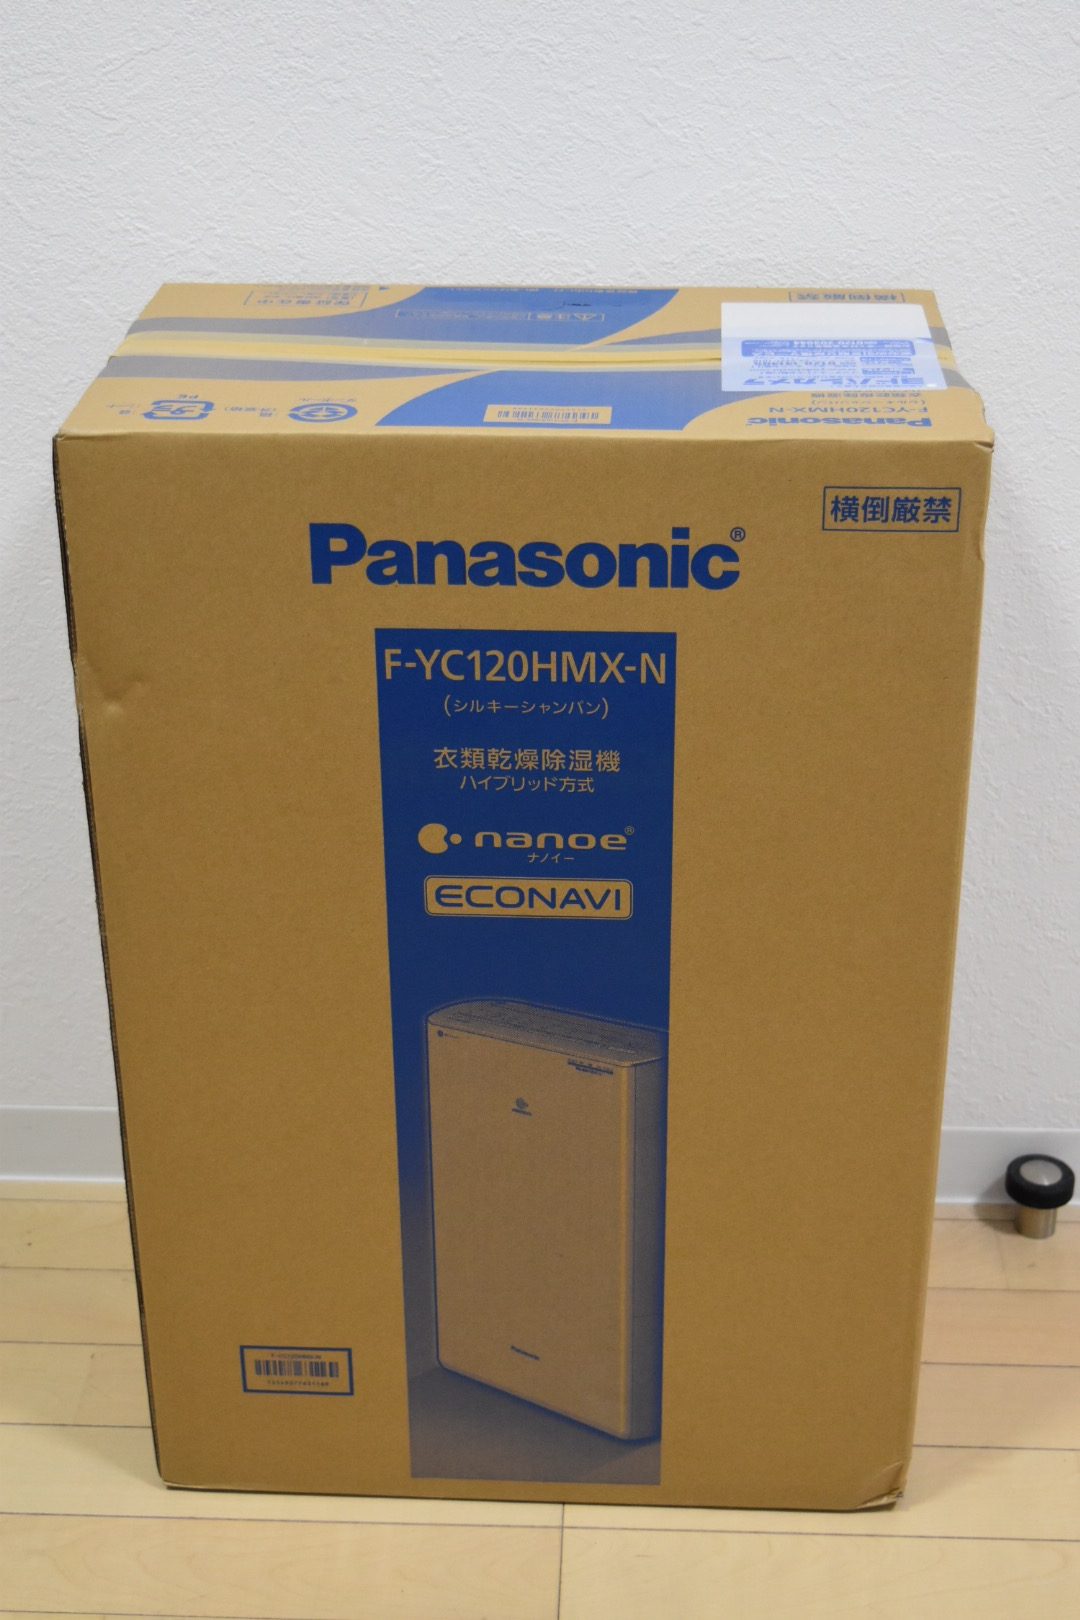 PANASONIC F-YC120HMX-N [衣類乾燥除湿機] を購入しました